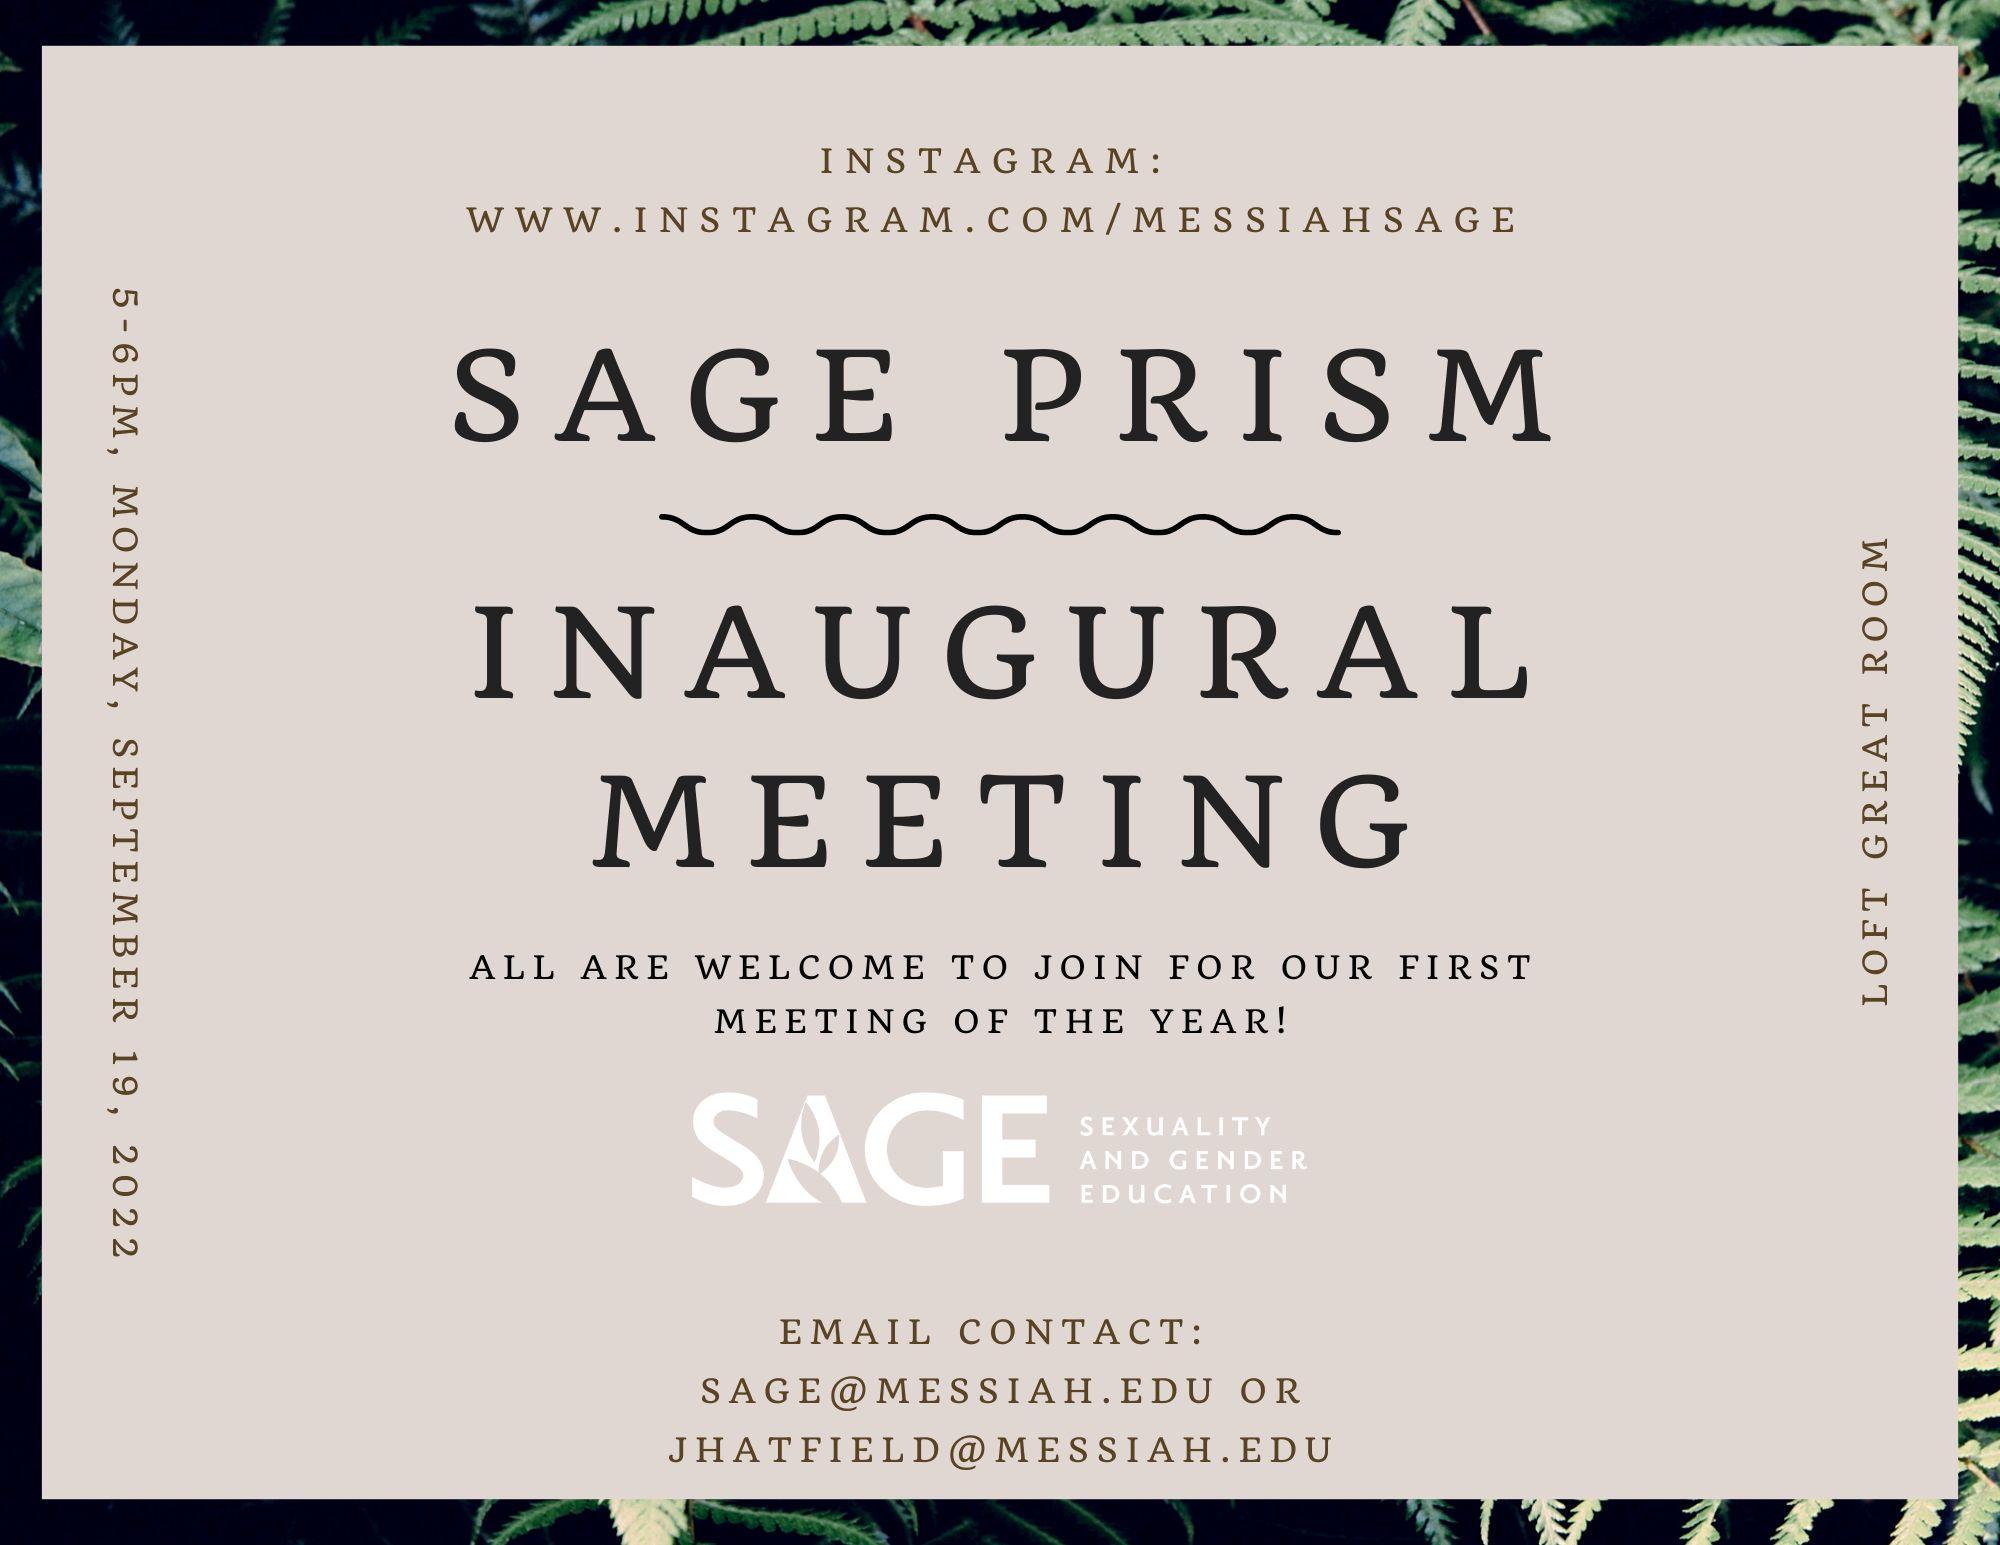 Sage prism meeting flyer